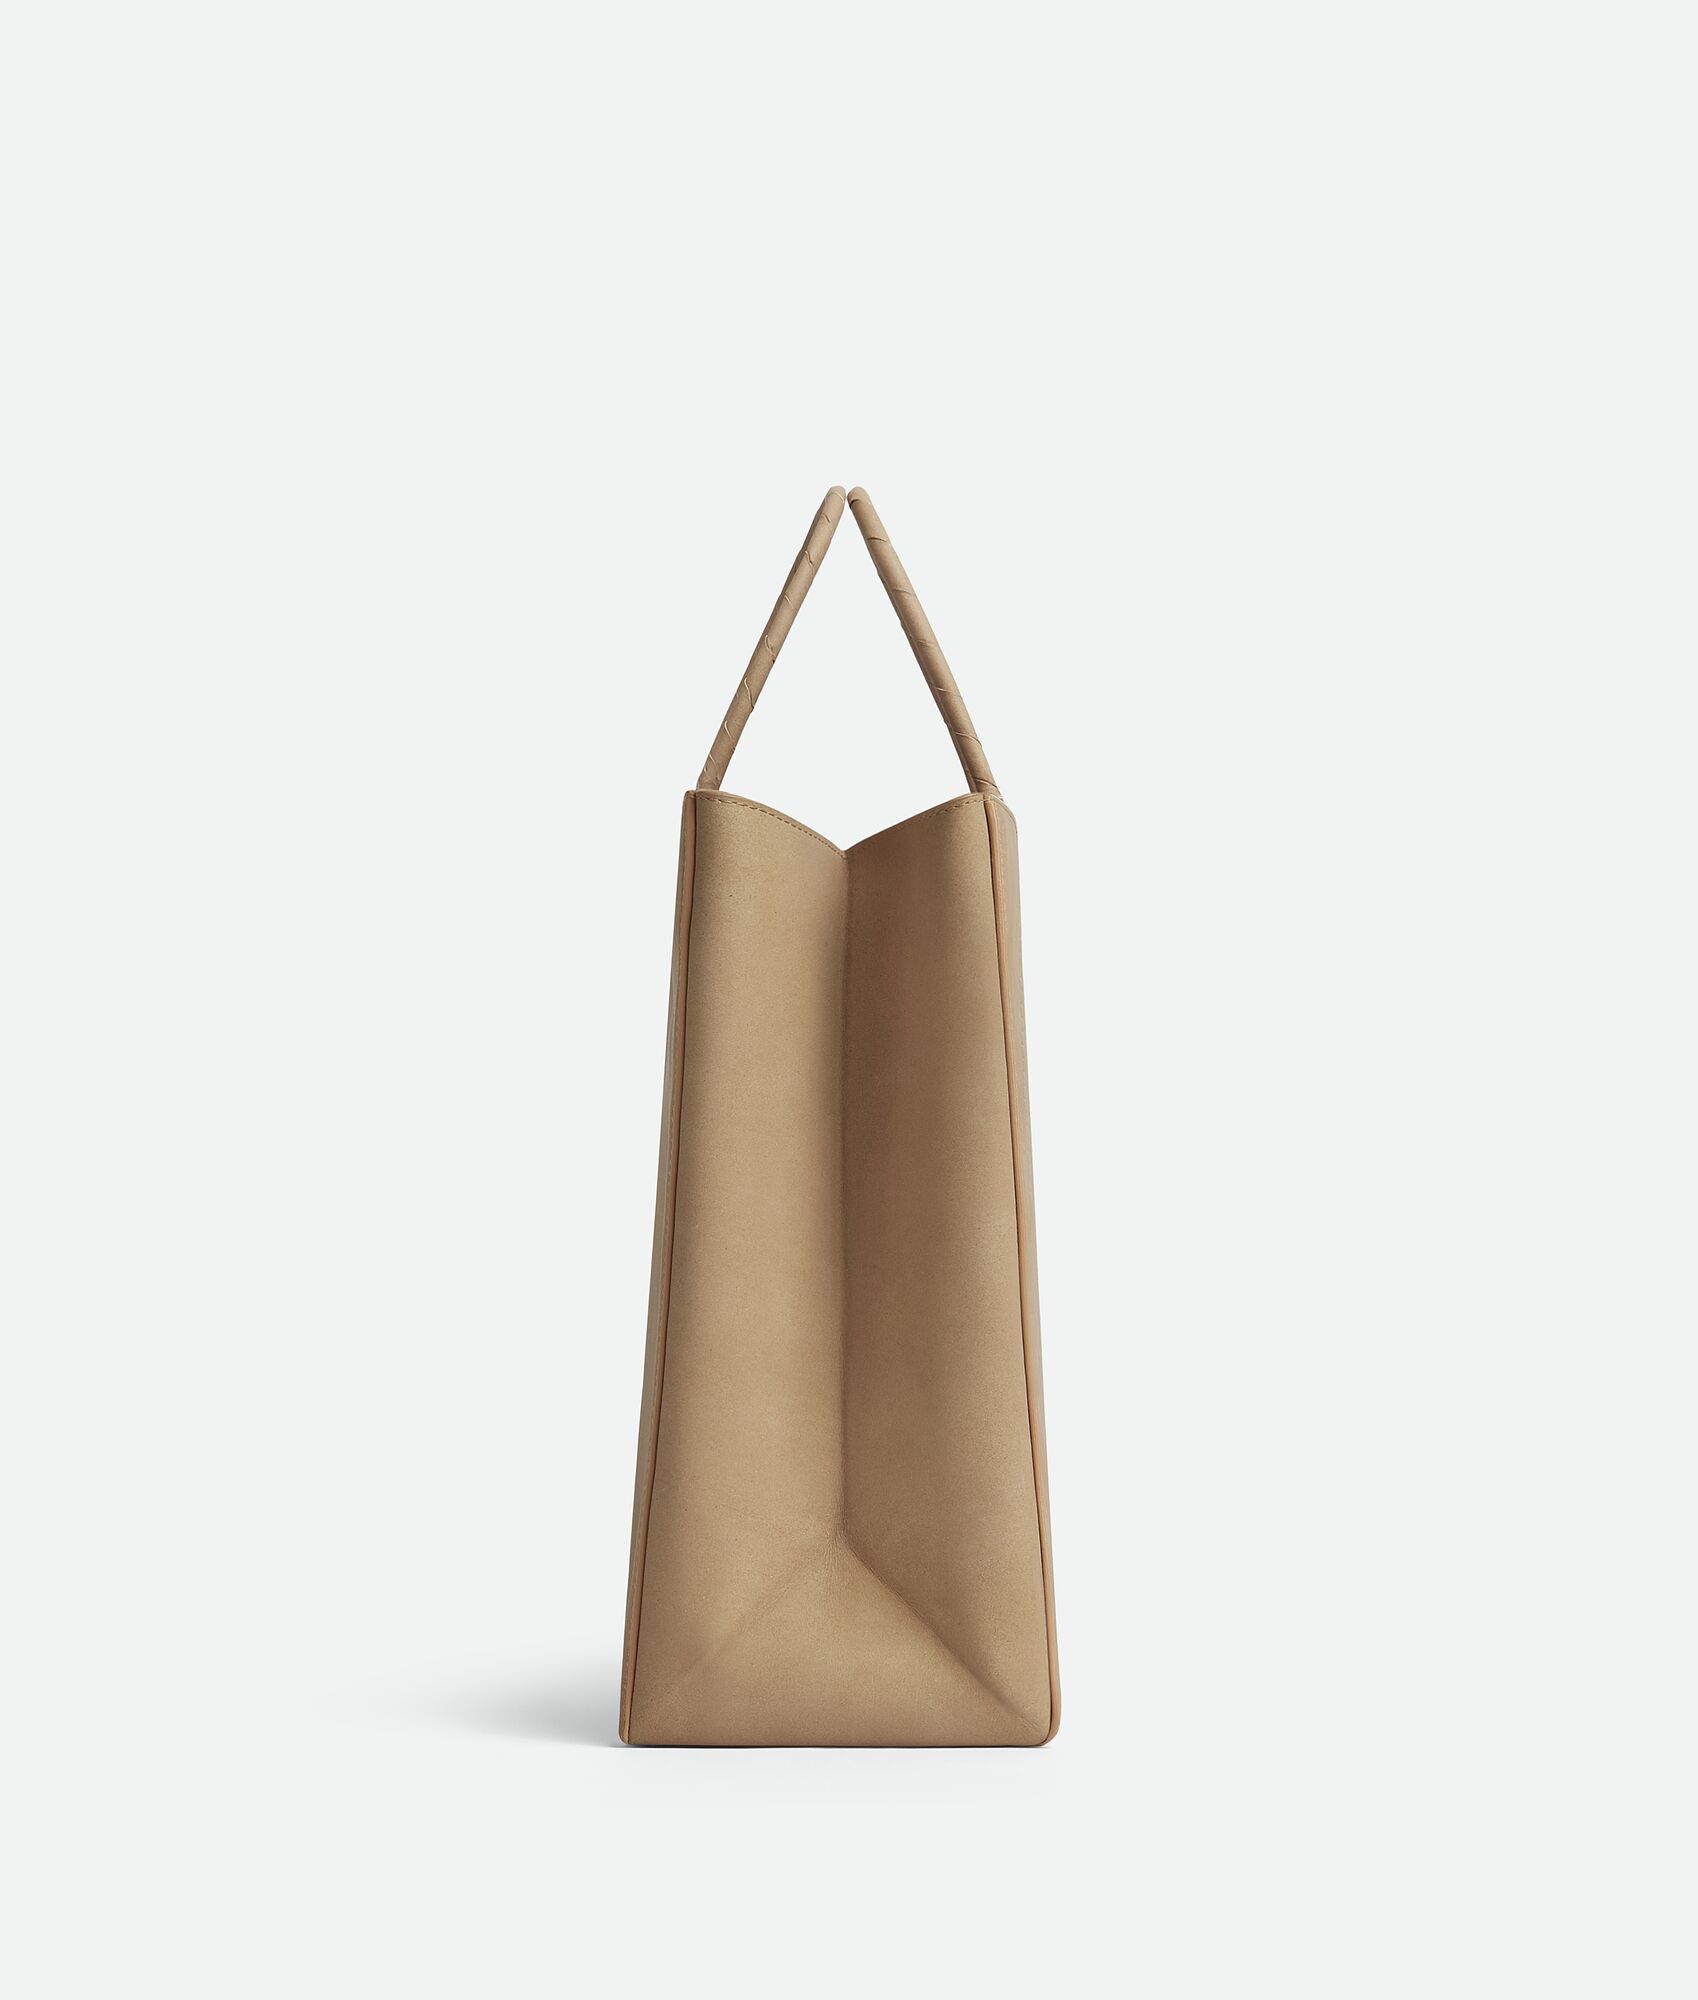 Bottega Veneta rilis tas berbentuk paper bag dalam koleksi terbarunya